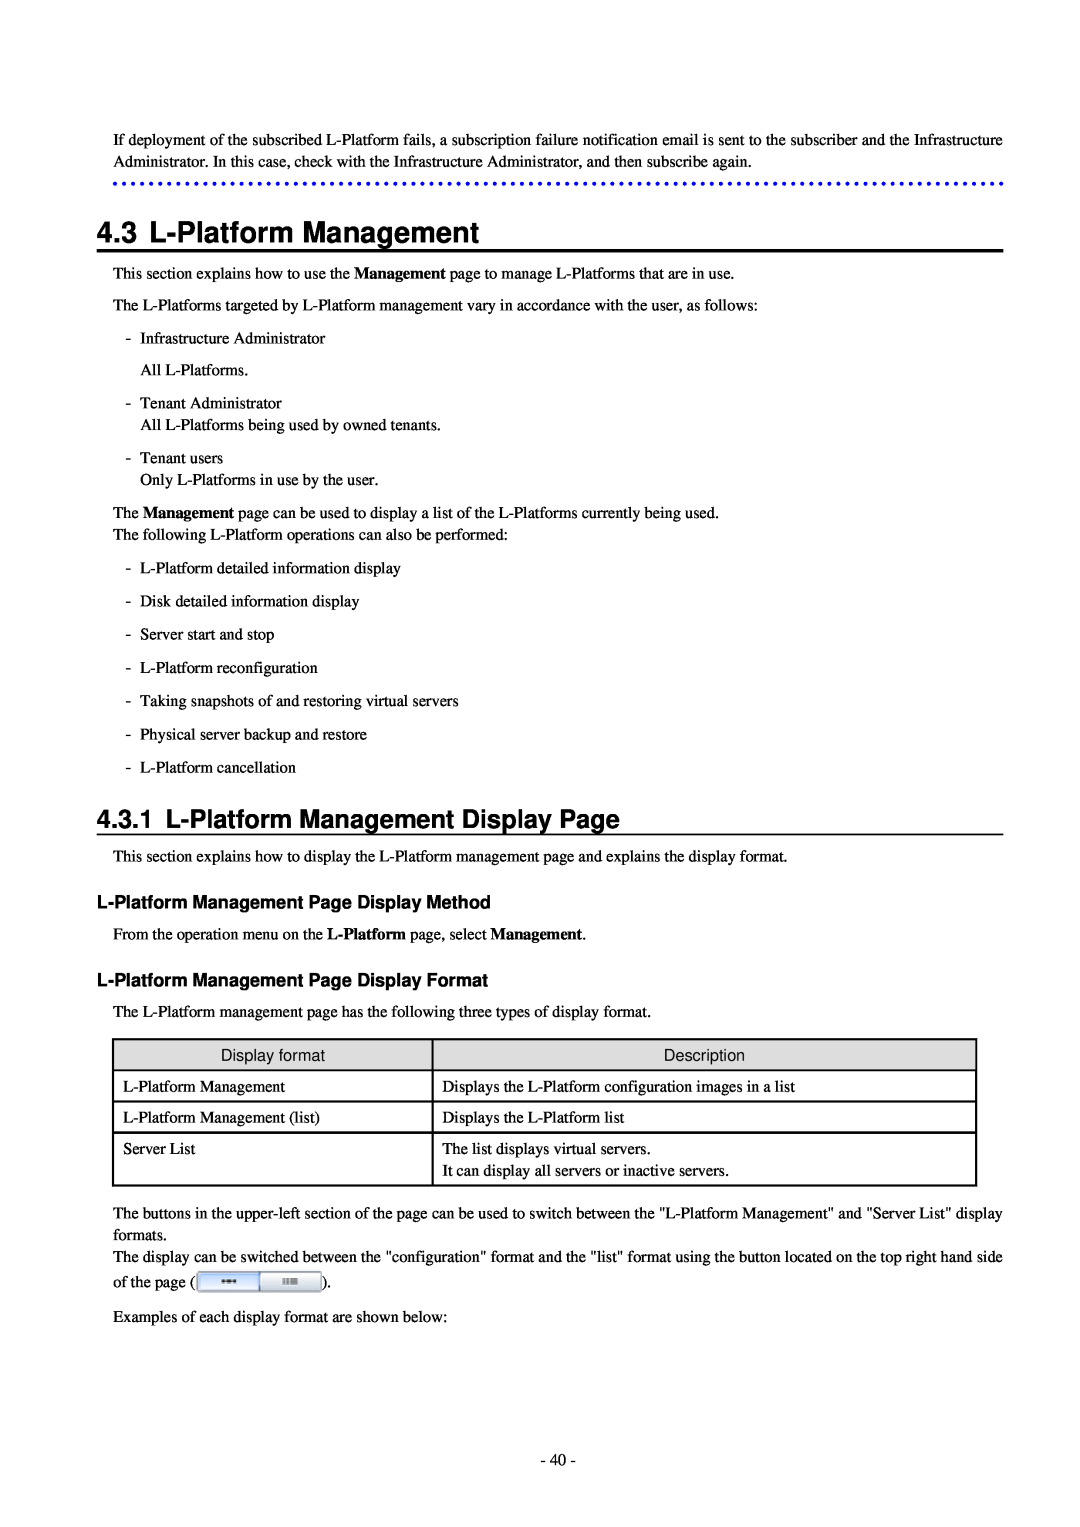 Fujitsu V3.0.0 manual L-Platform Management Display Page, L-Platform Management Page Display Method 